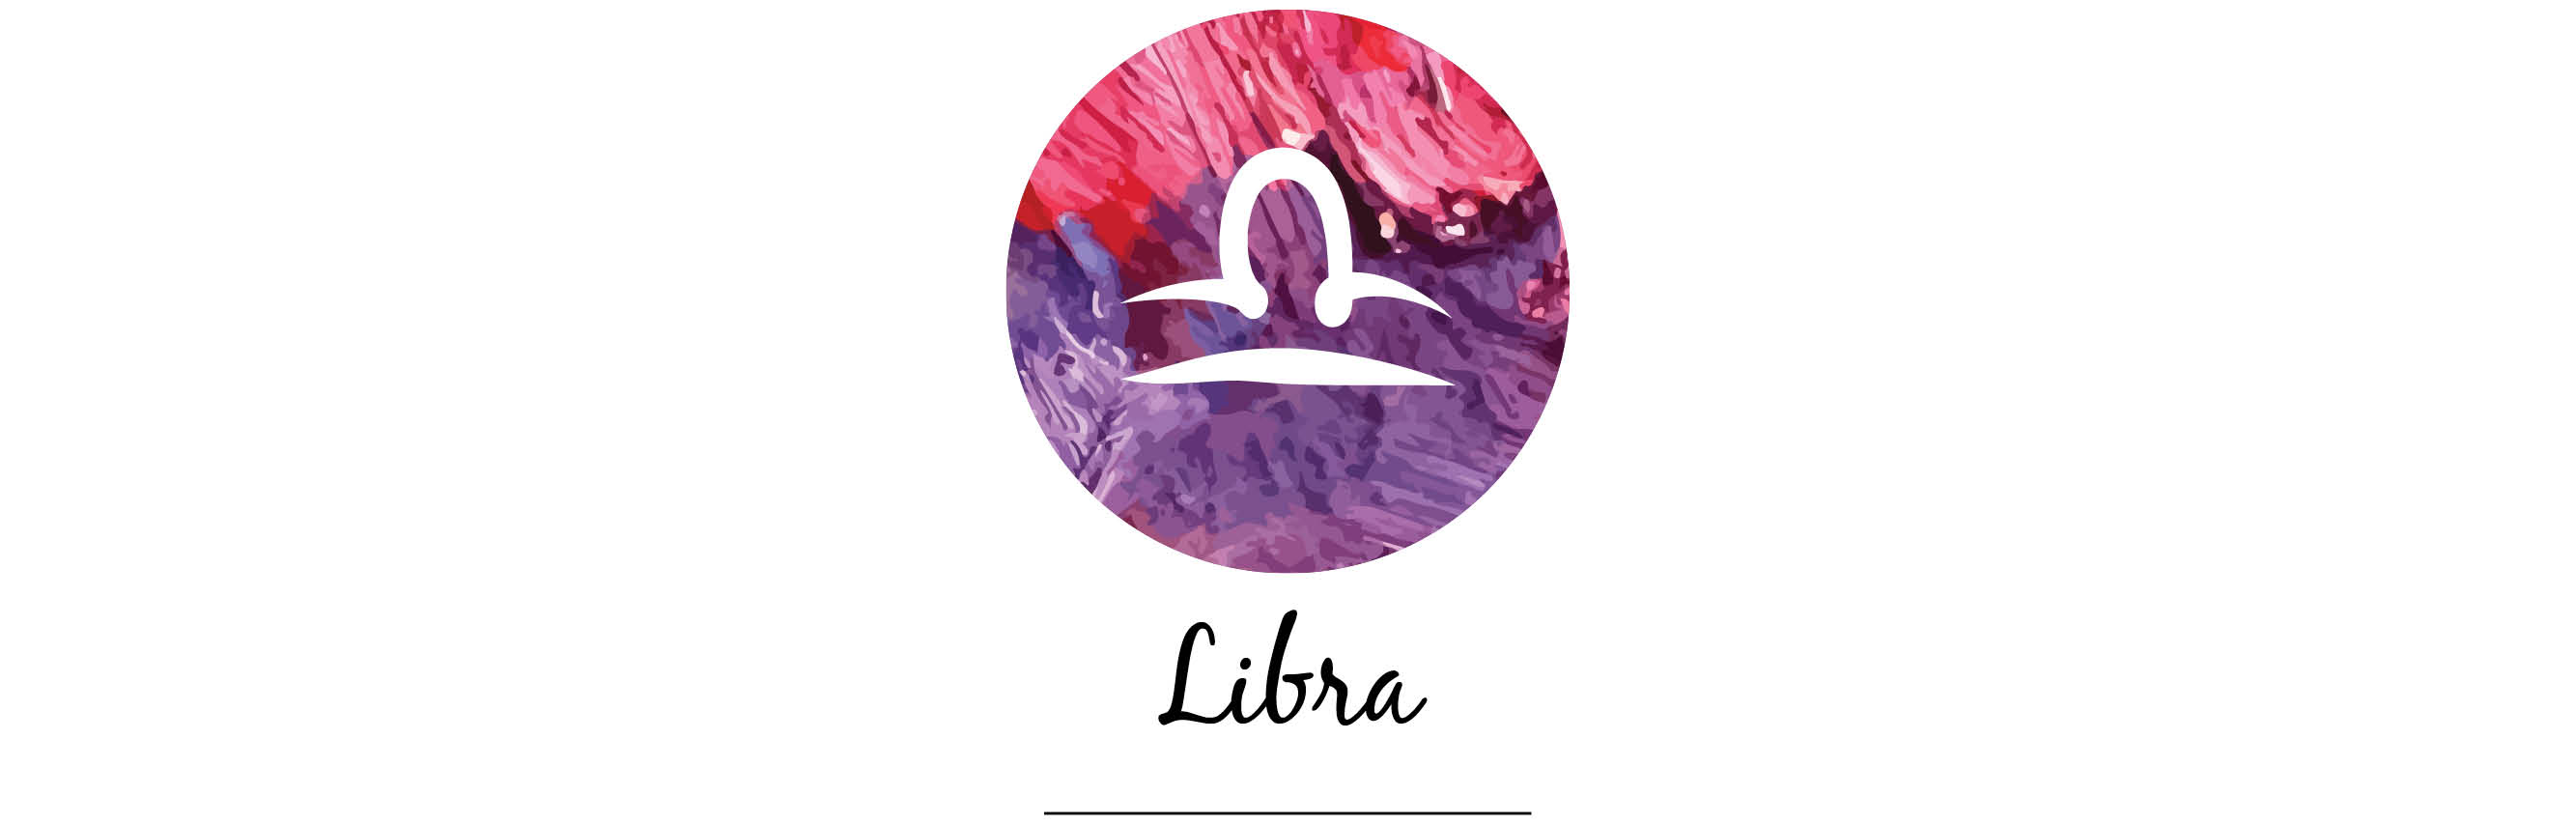 Libra1